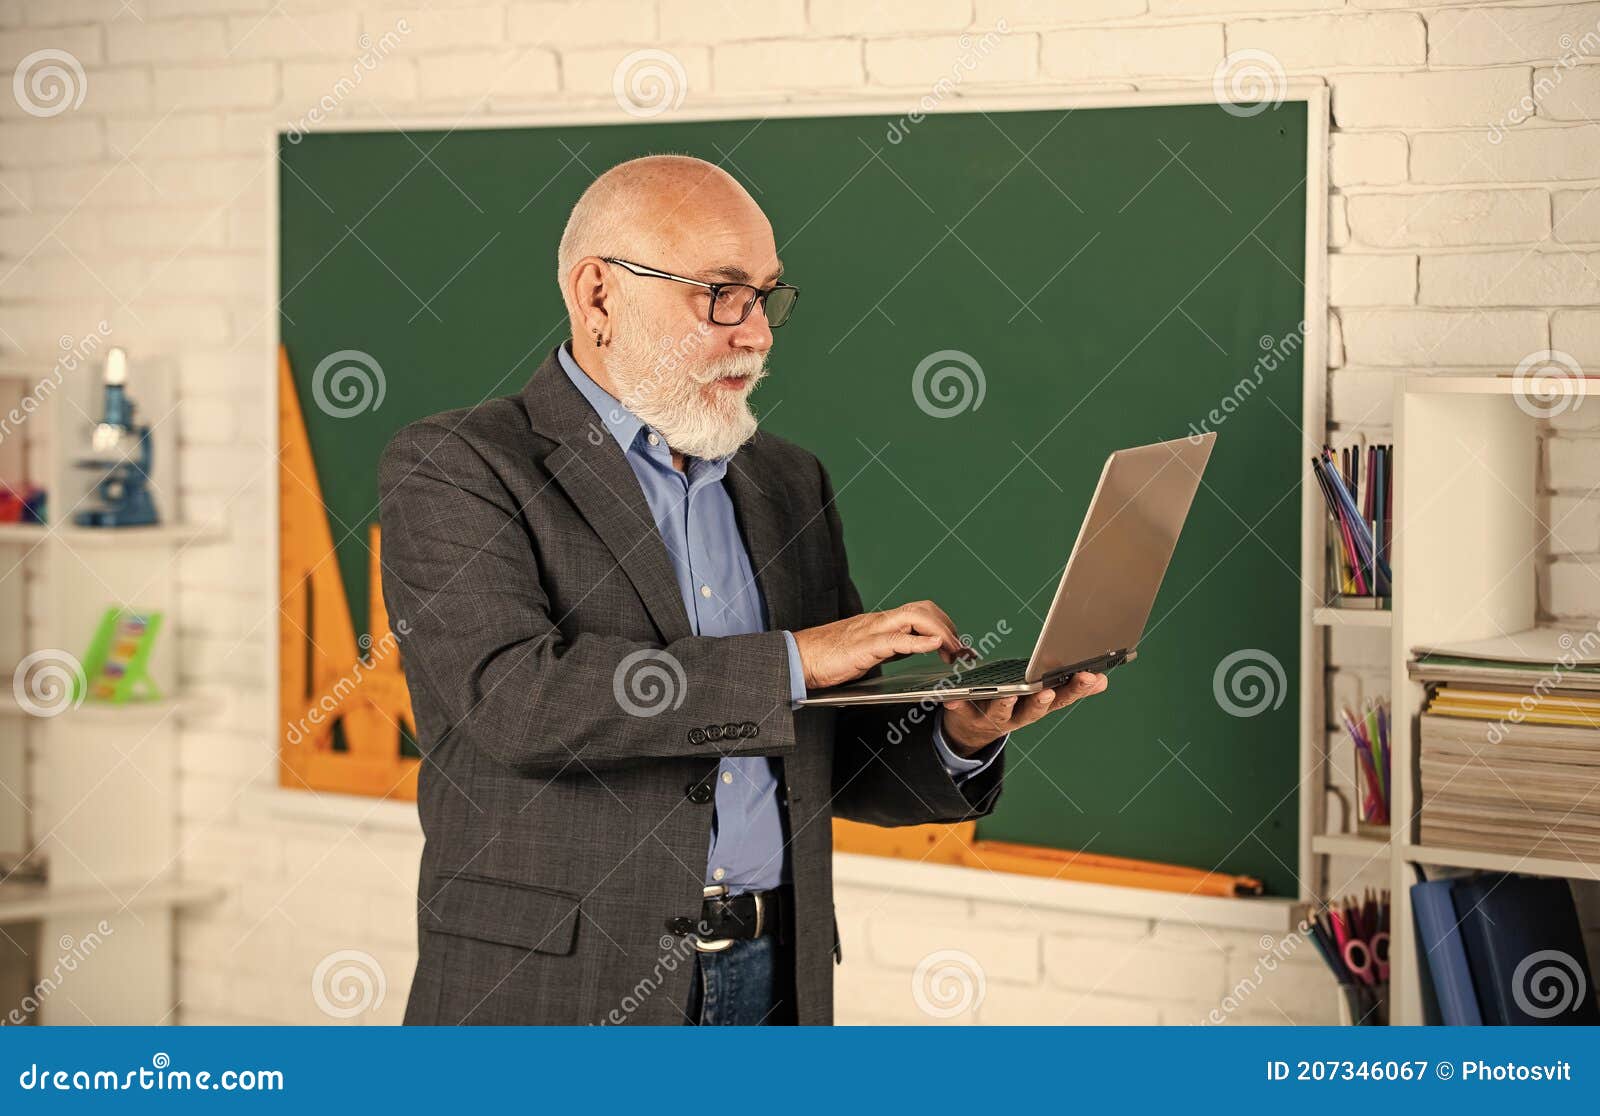 videoconferencing keeps homebound students connected. senior intelligent man teacher use laptop. distant education goals